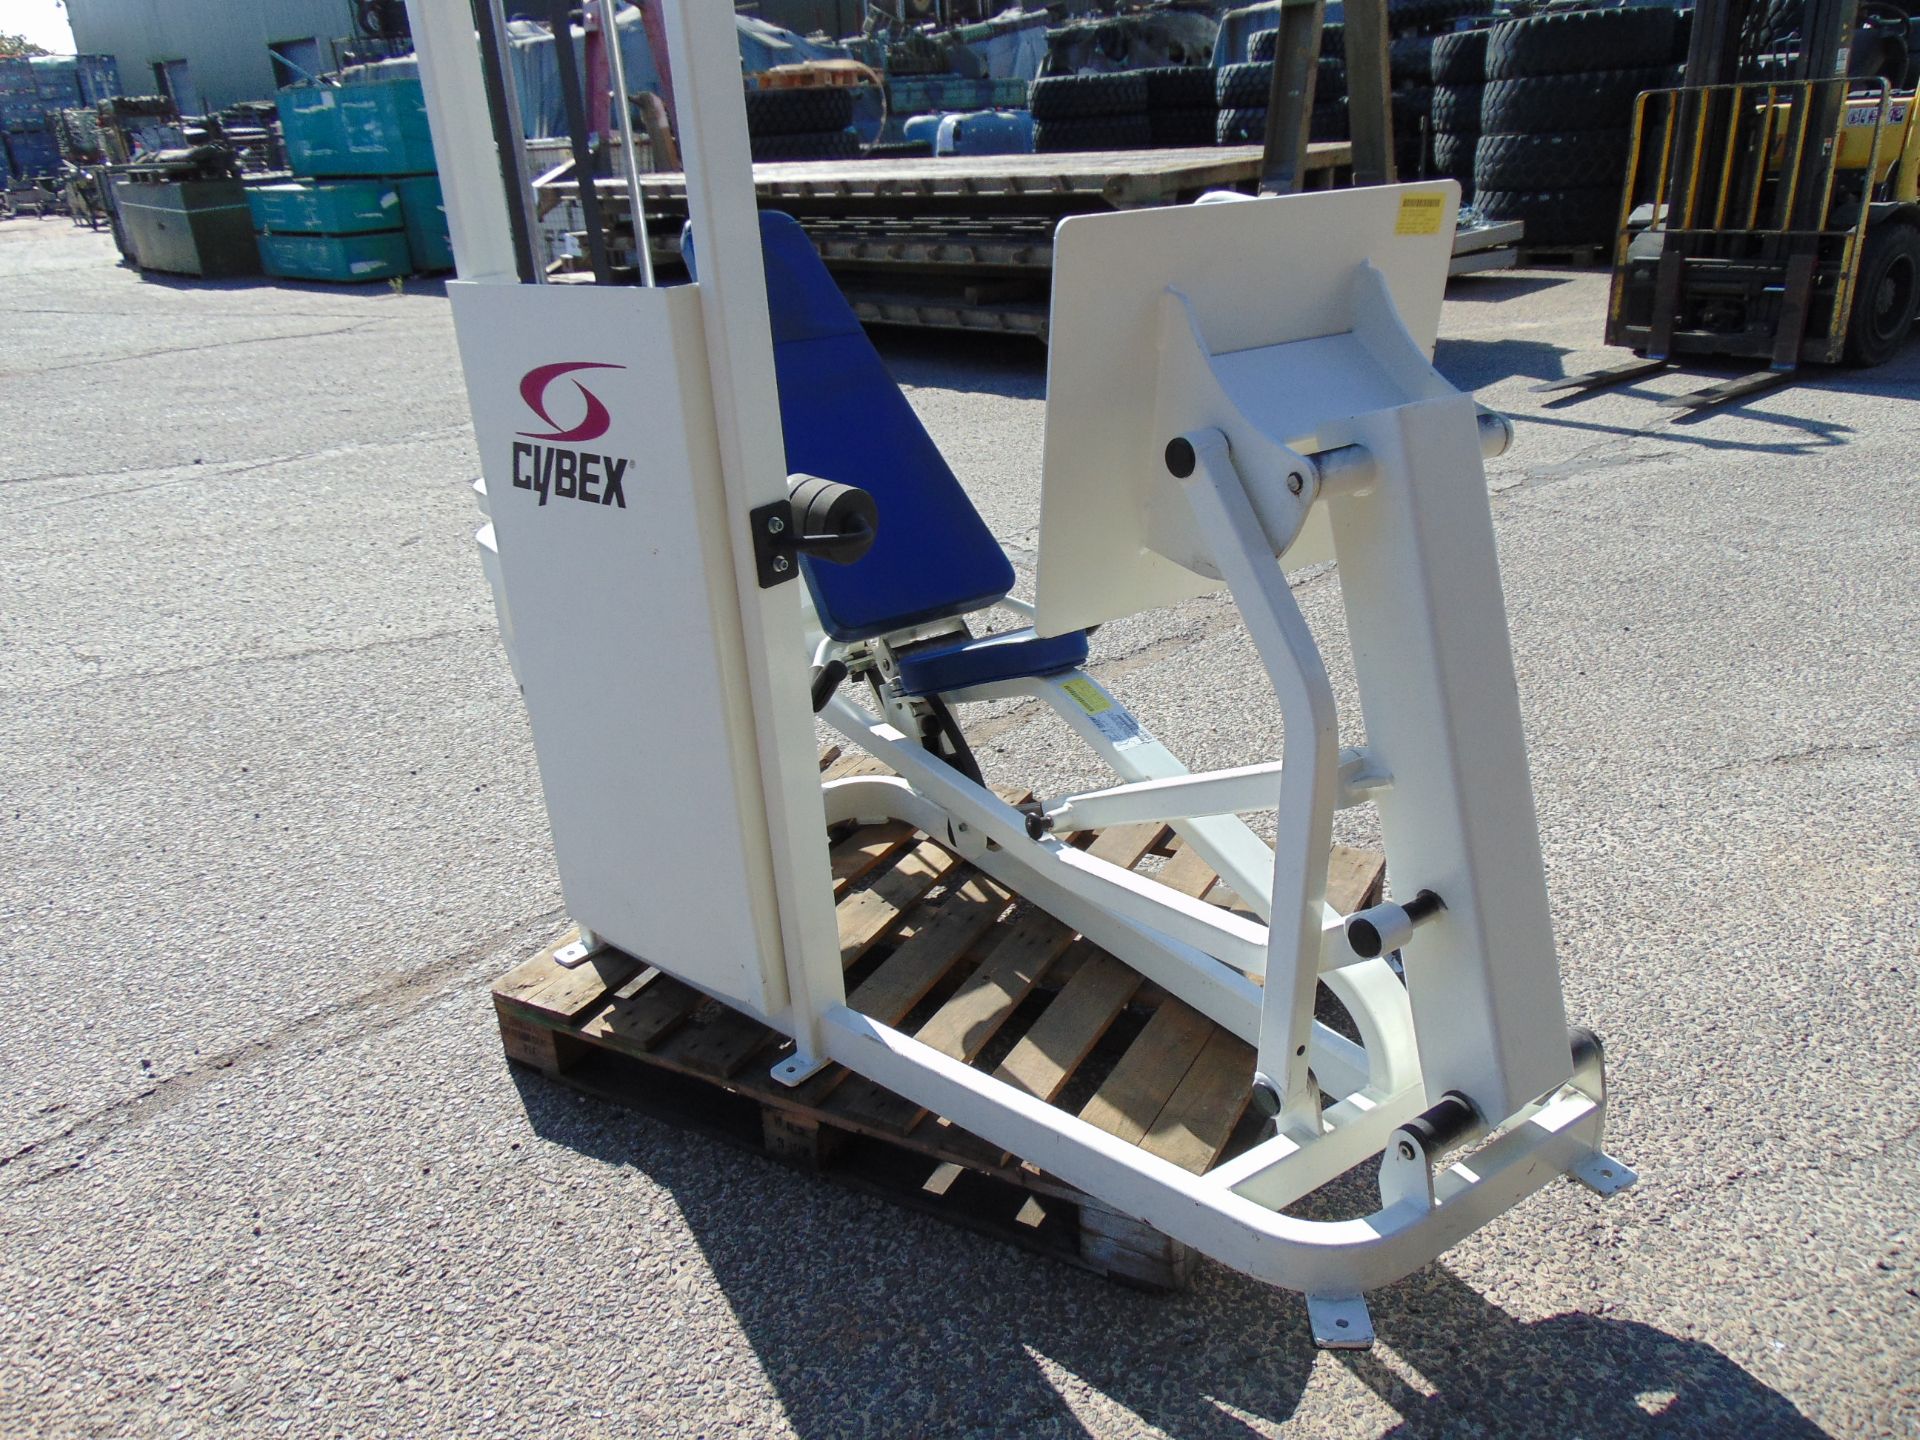 Cybex Seated Leg Press Exercise Machine - Image 7 of 8